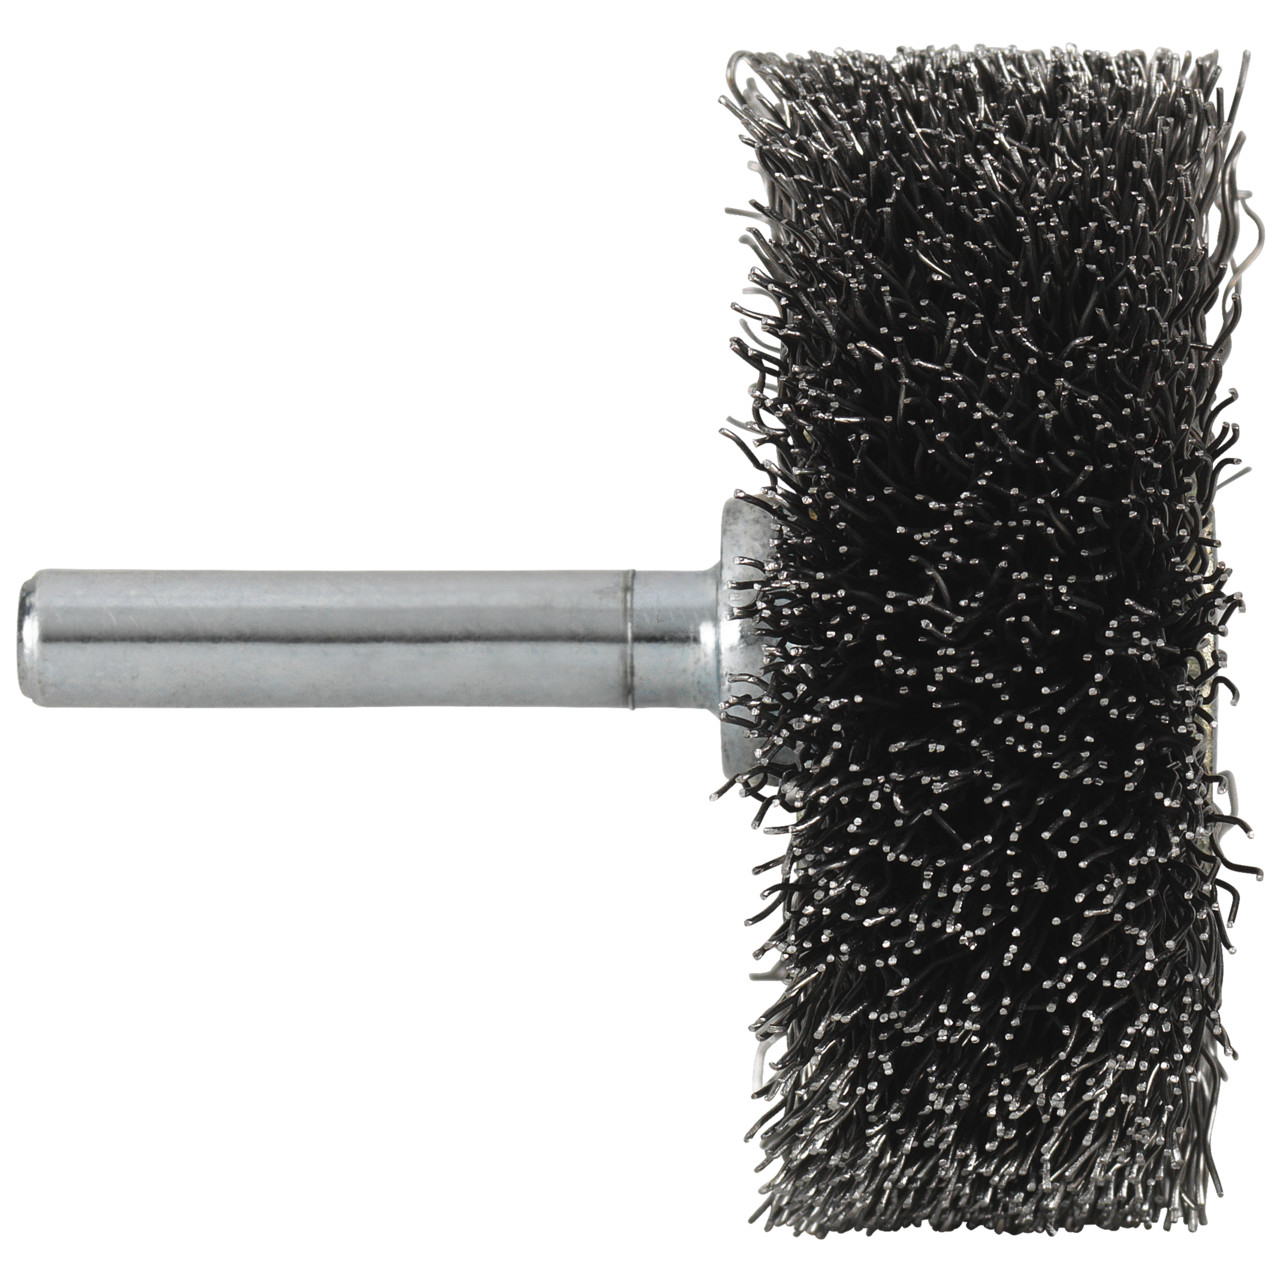 Tyrolit Spazzole a gambo tondo DxLxH-GExI 70x15x19-6x30 Per acciaio inox, forma: 52RDW - (spazzole a gambo tondo), Art. 34276014